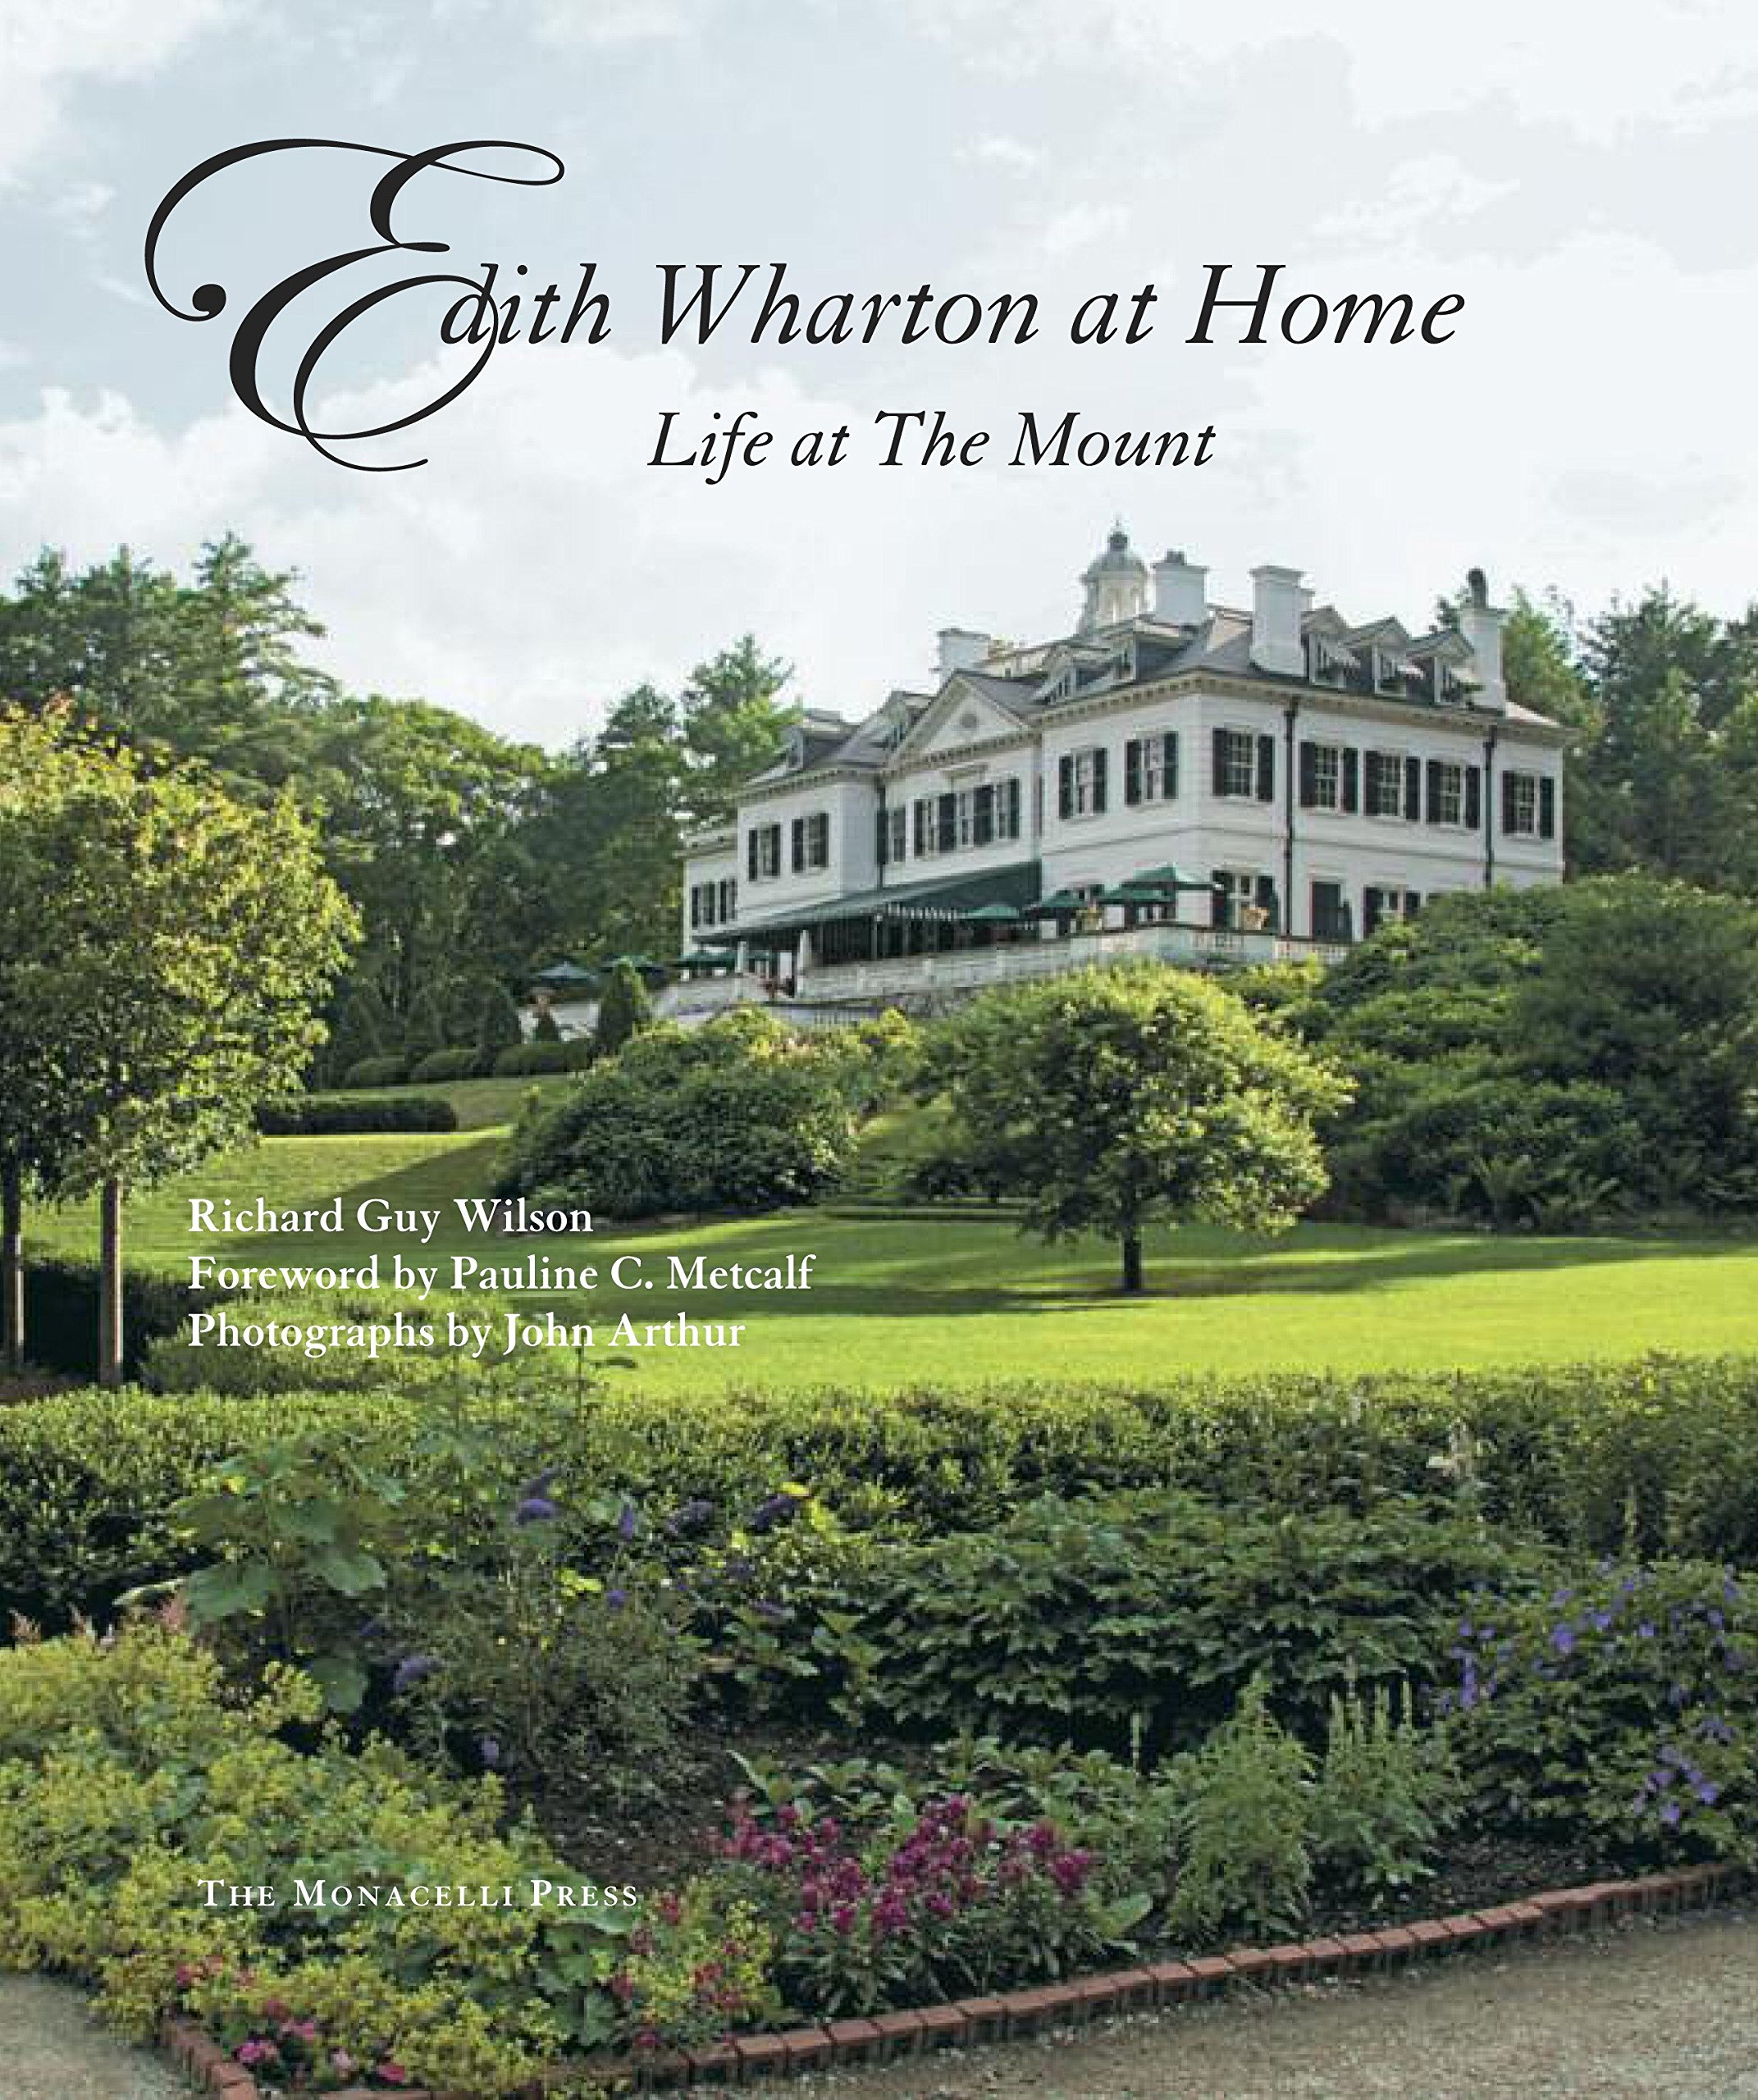 Edith Wharton Home: Life at the Mount by Richard Guy Wilson